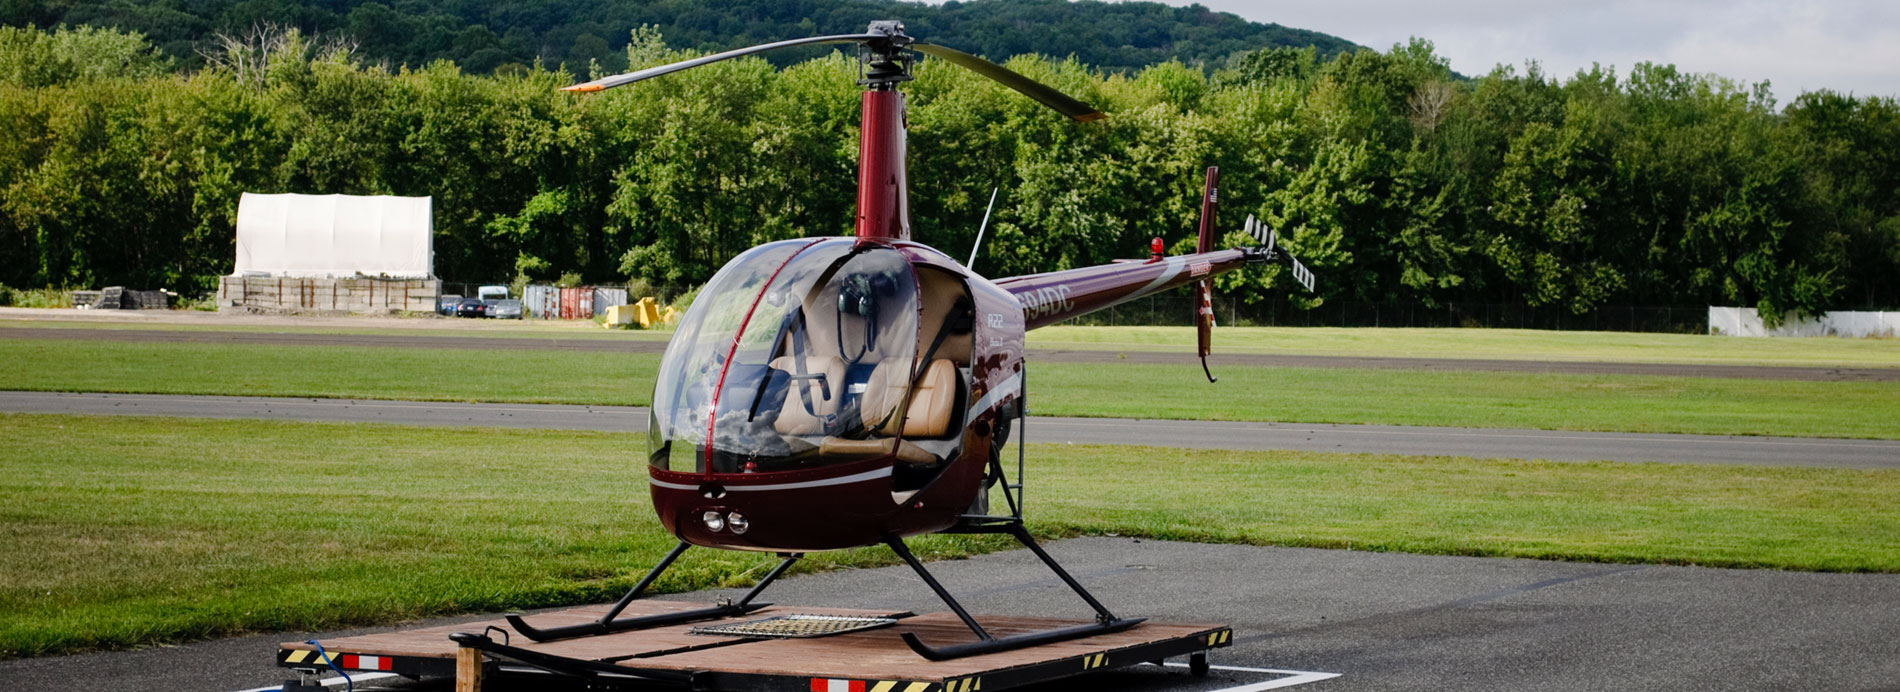 Centennial Helicopters rental program